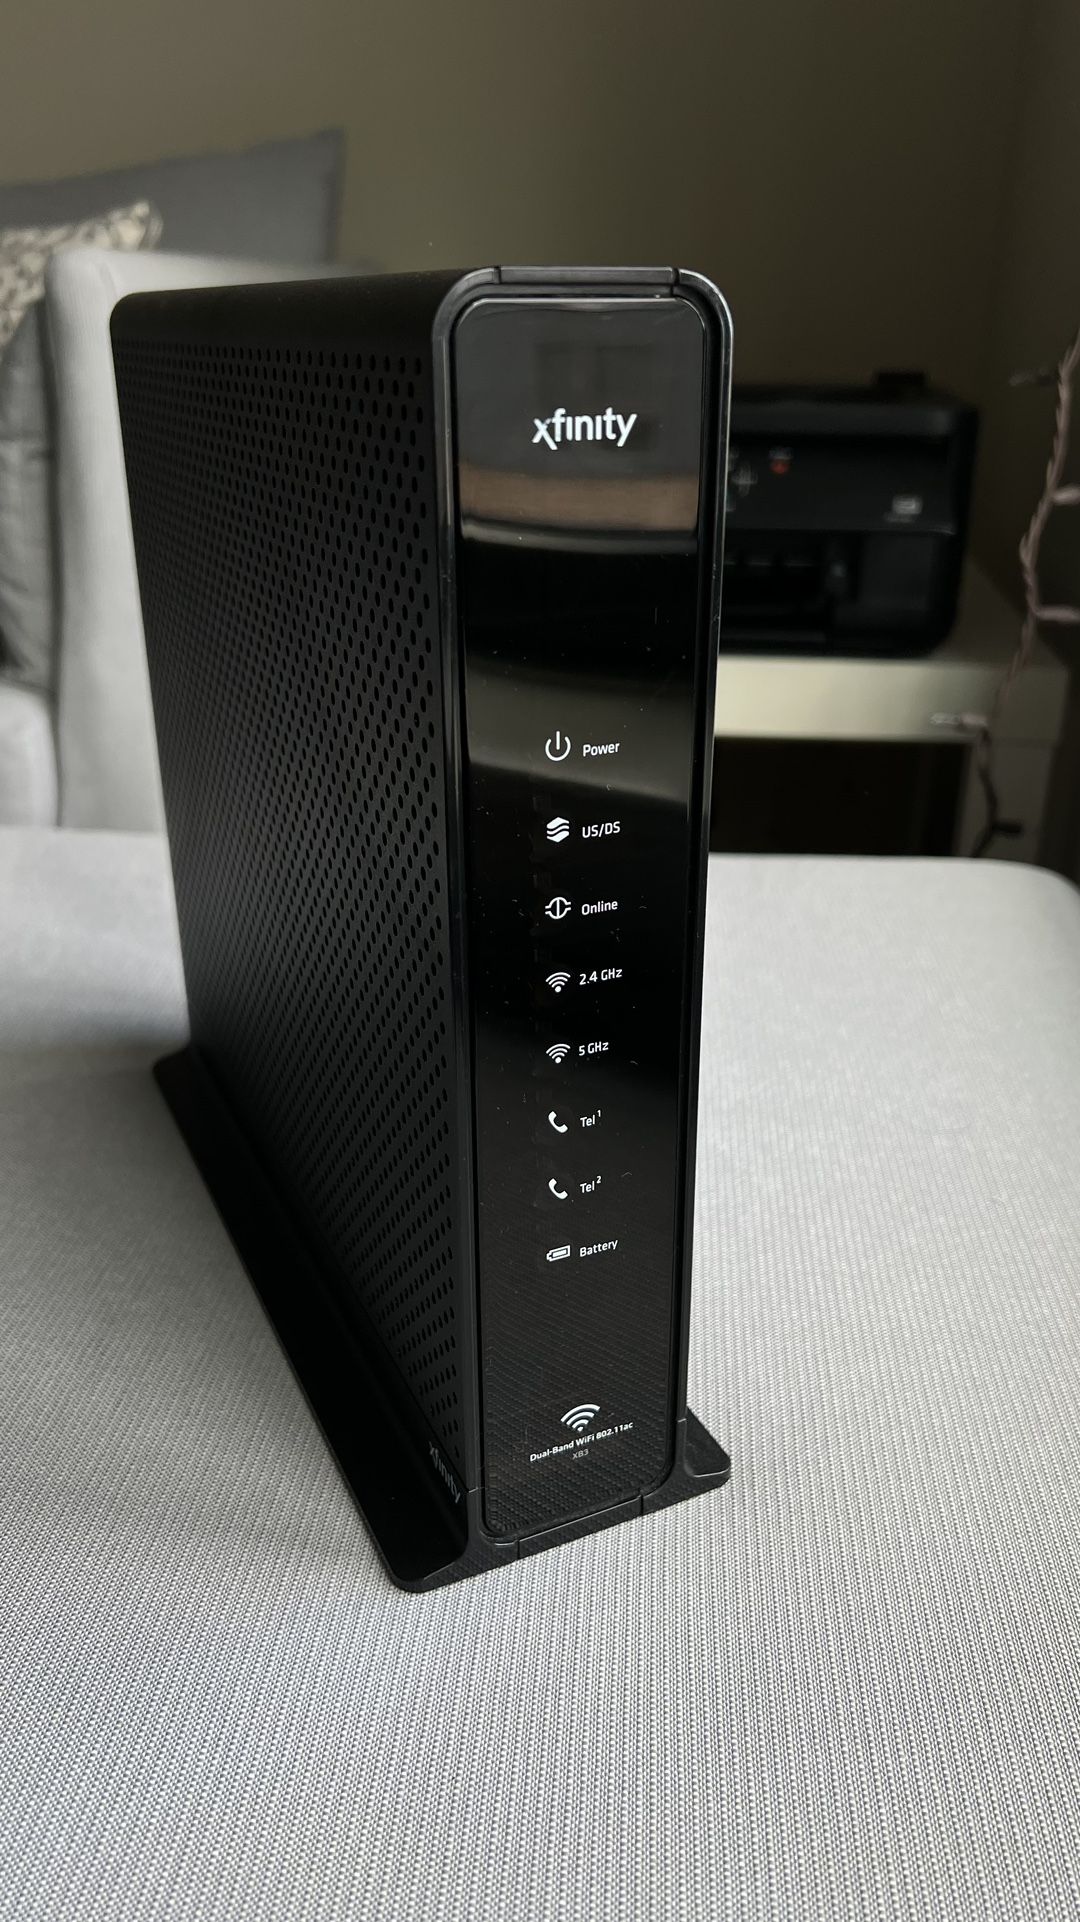 Xfinity Arris Dual Band Wireless Modem Router